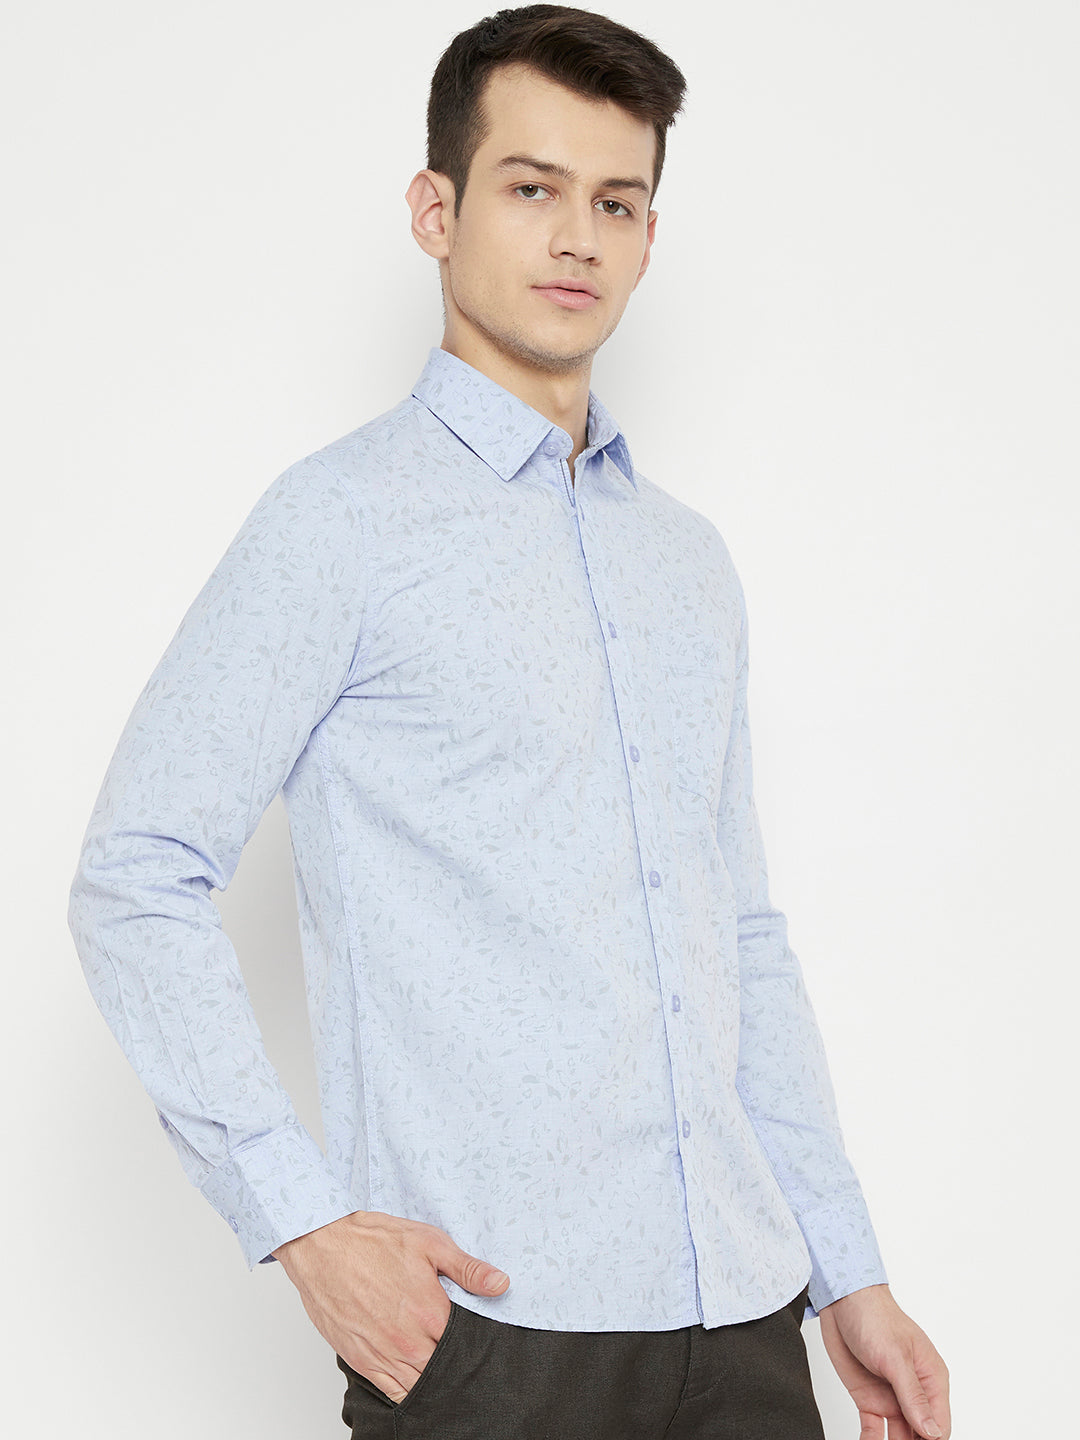 Blue Printed Slim Fit shirt - Men Shirts